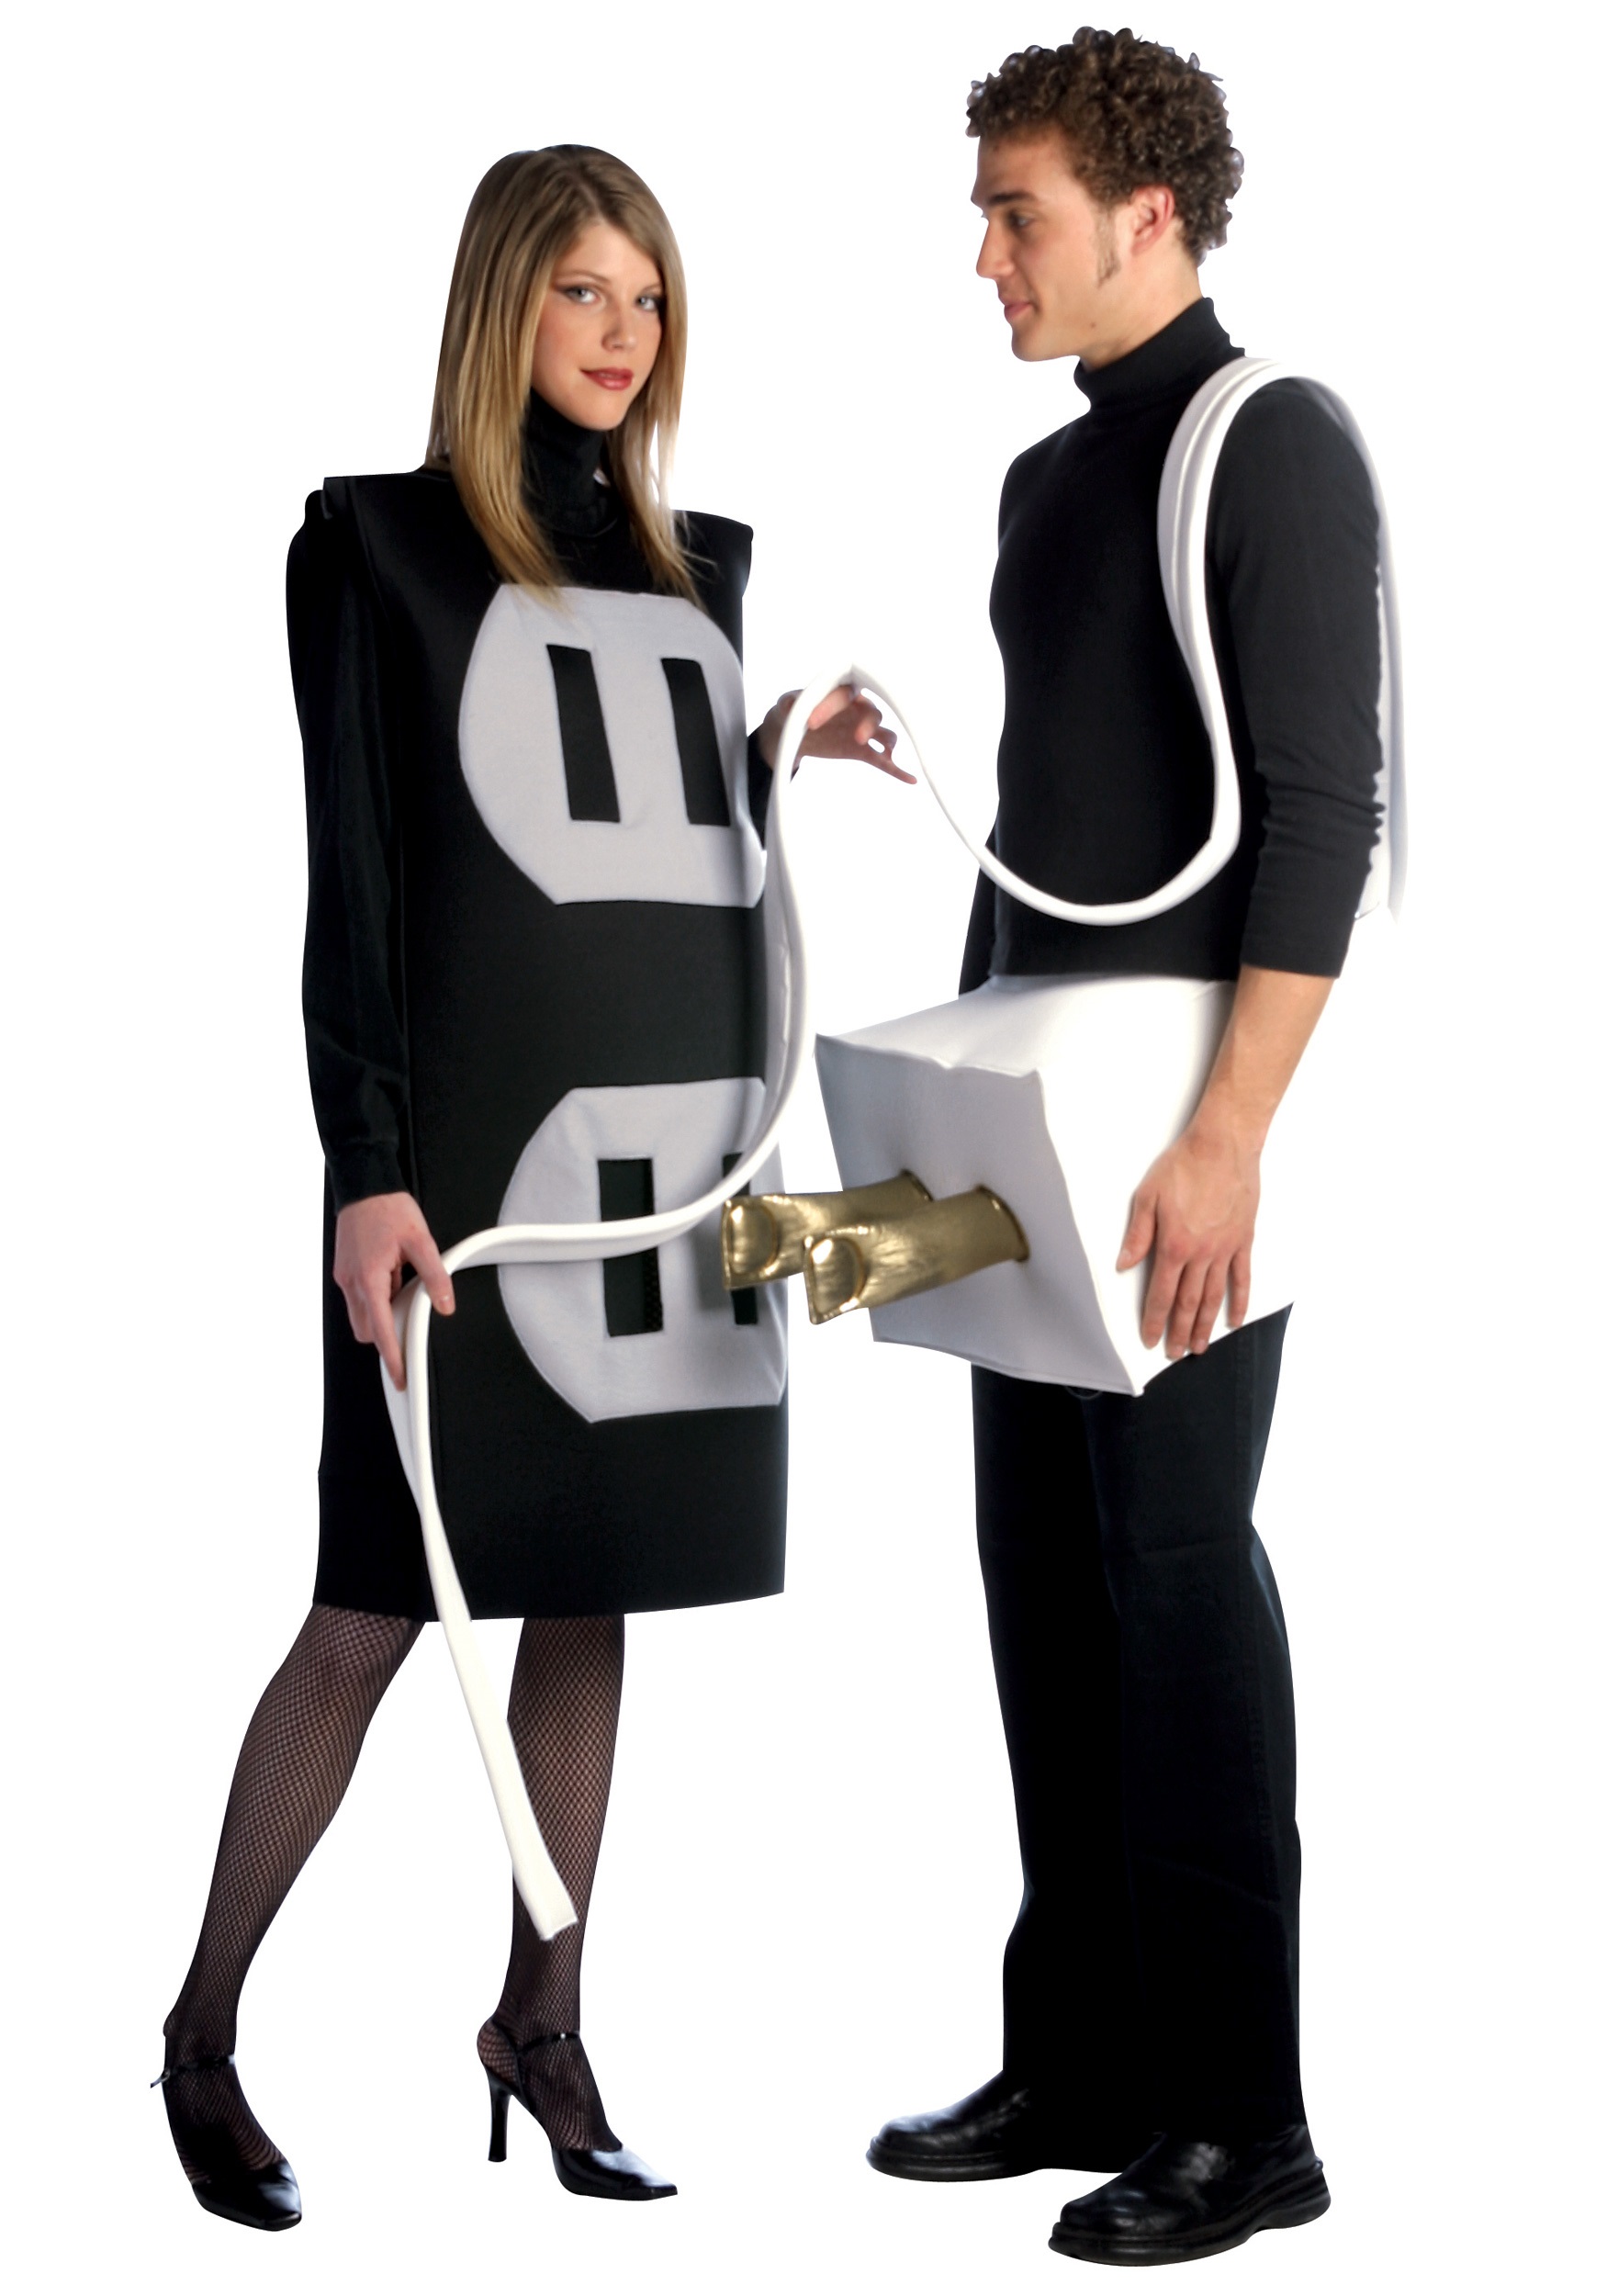 Plug And Socket Fancy Dress Costume - Funny Couples Fancy Dress Costume Ideas